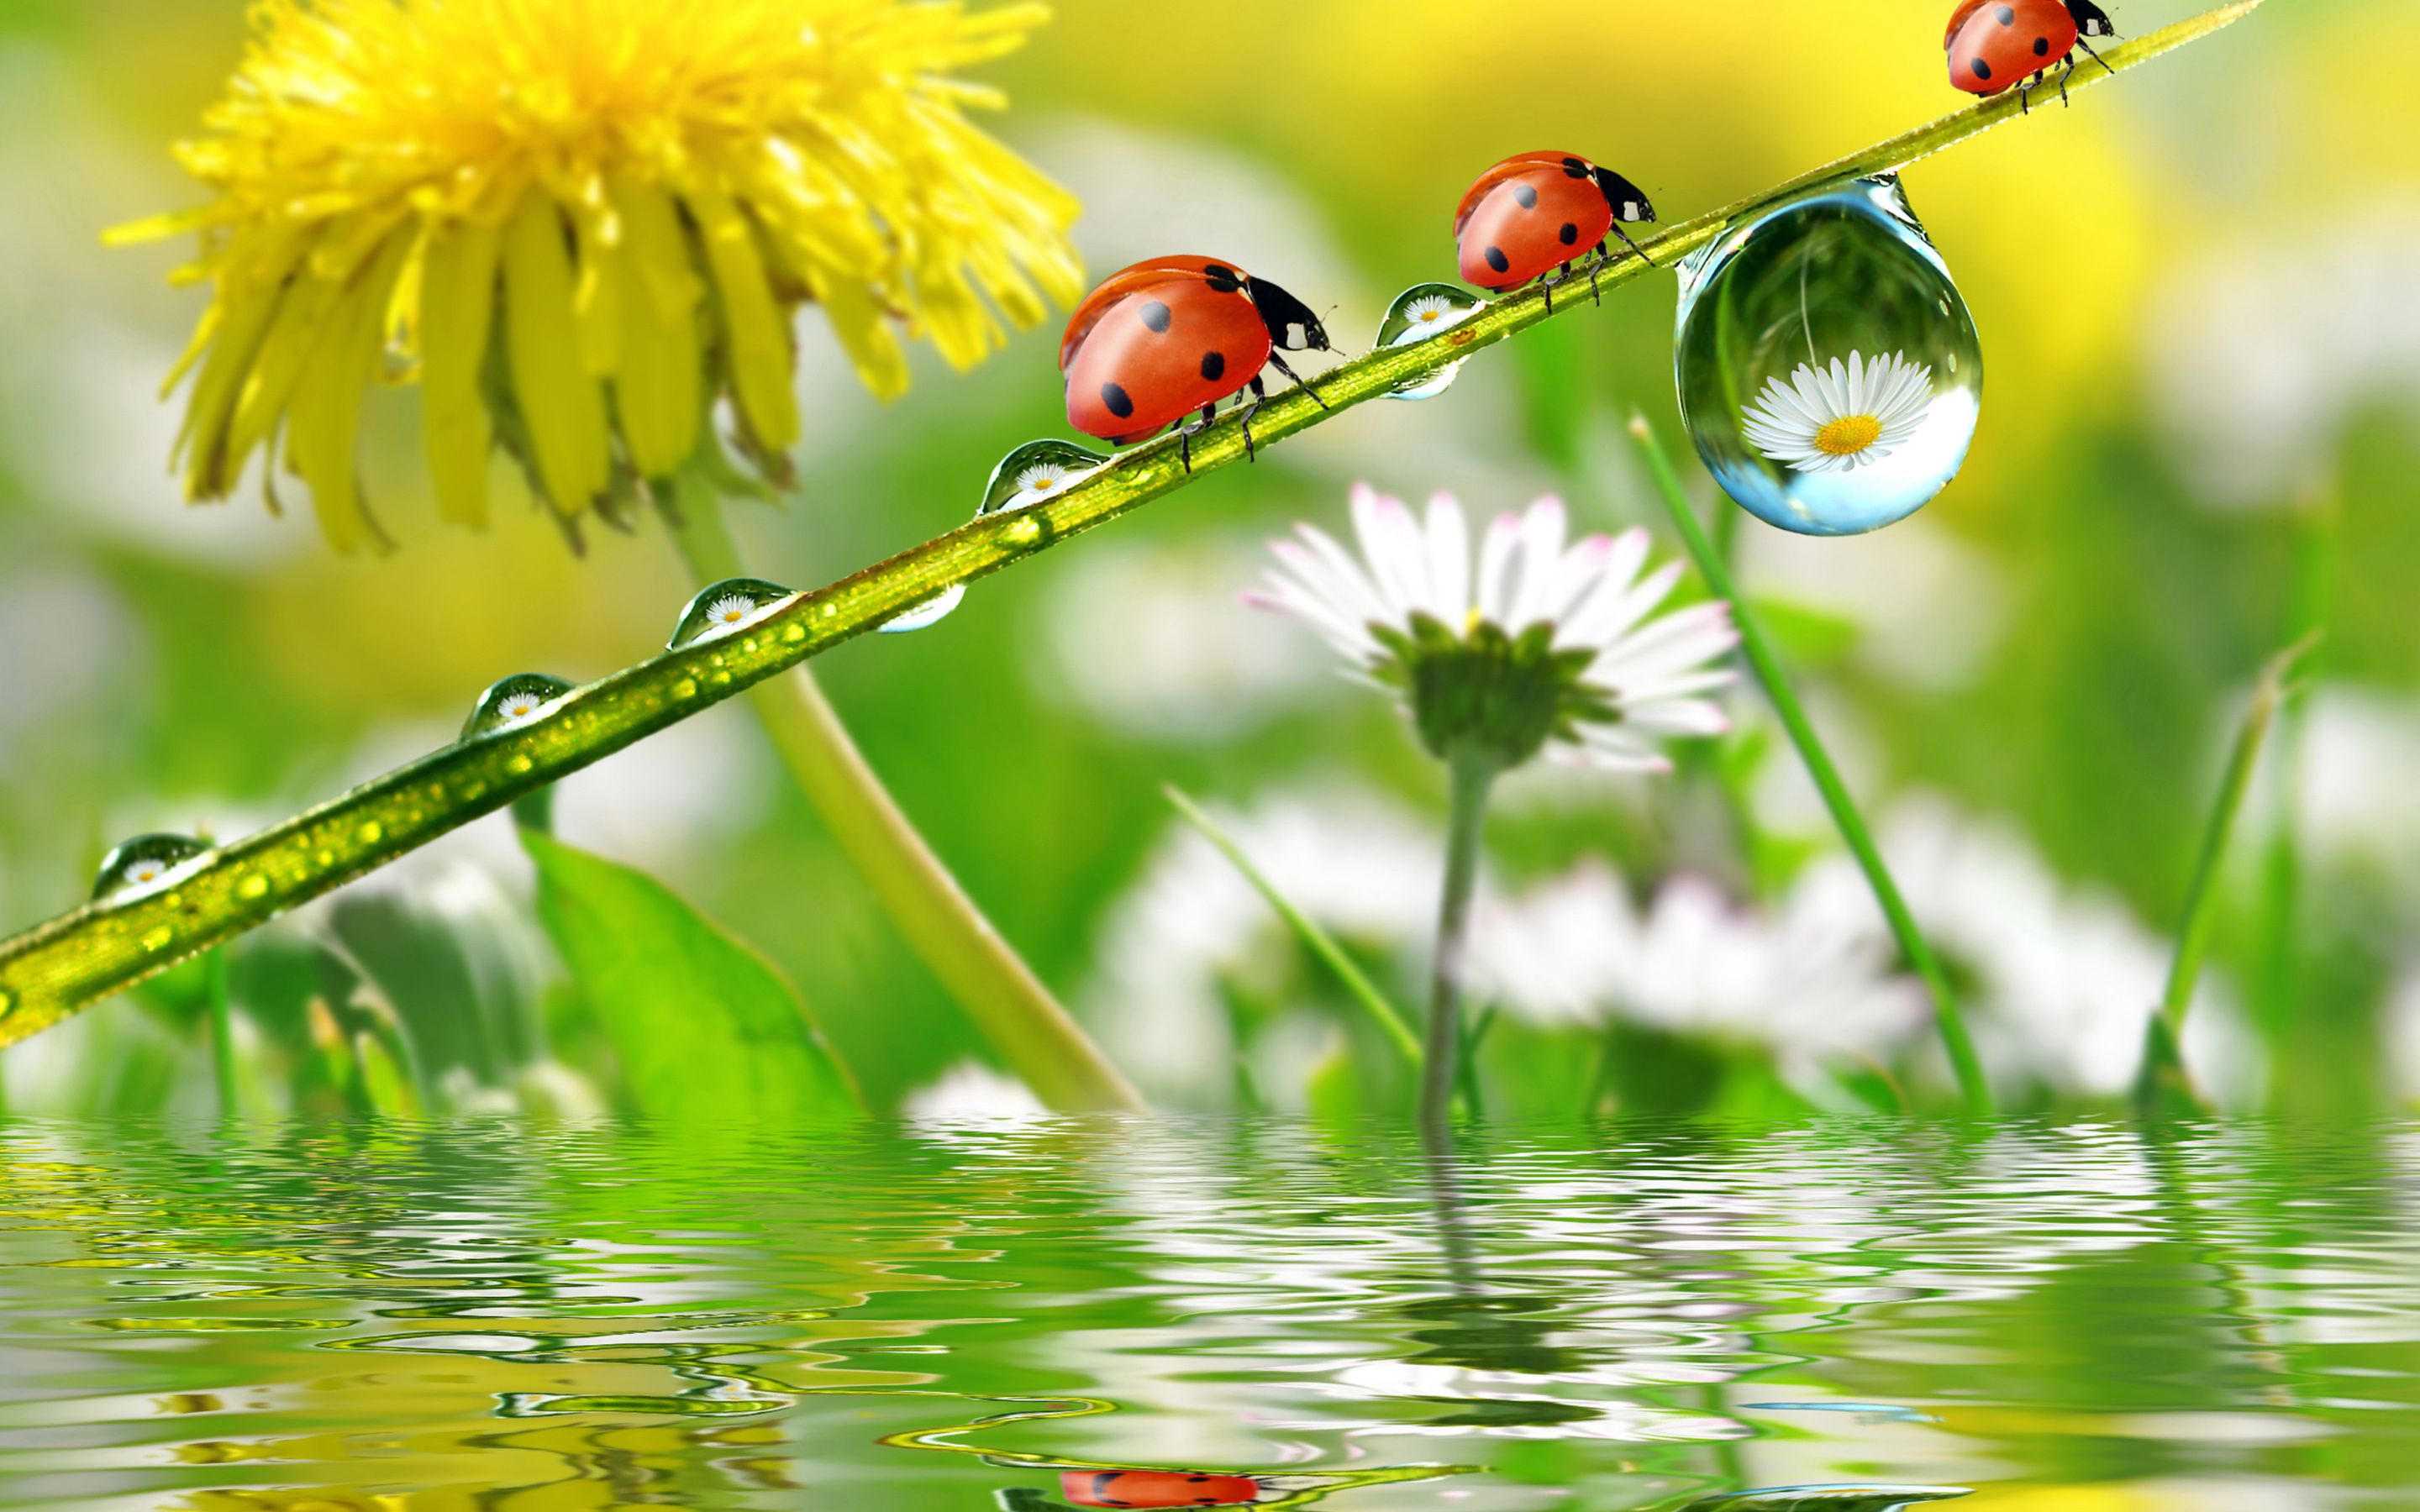 Nature Dandelion Chamomile Insect Ladybug Spring Rain Drops Water Desktop HD Wallpaper For Mobile Phones And Computer 2880x1800, Wallpaper13.com